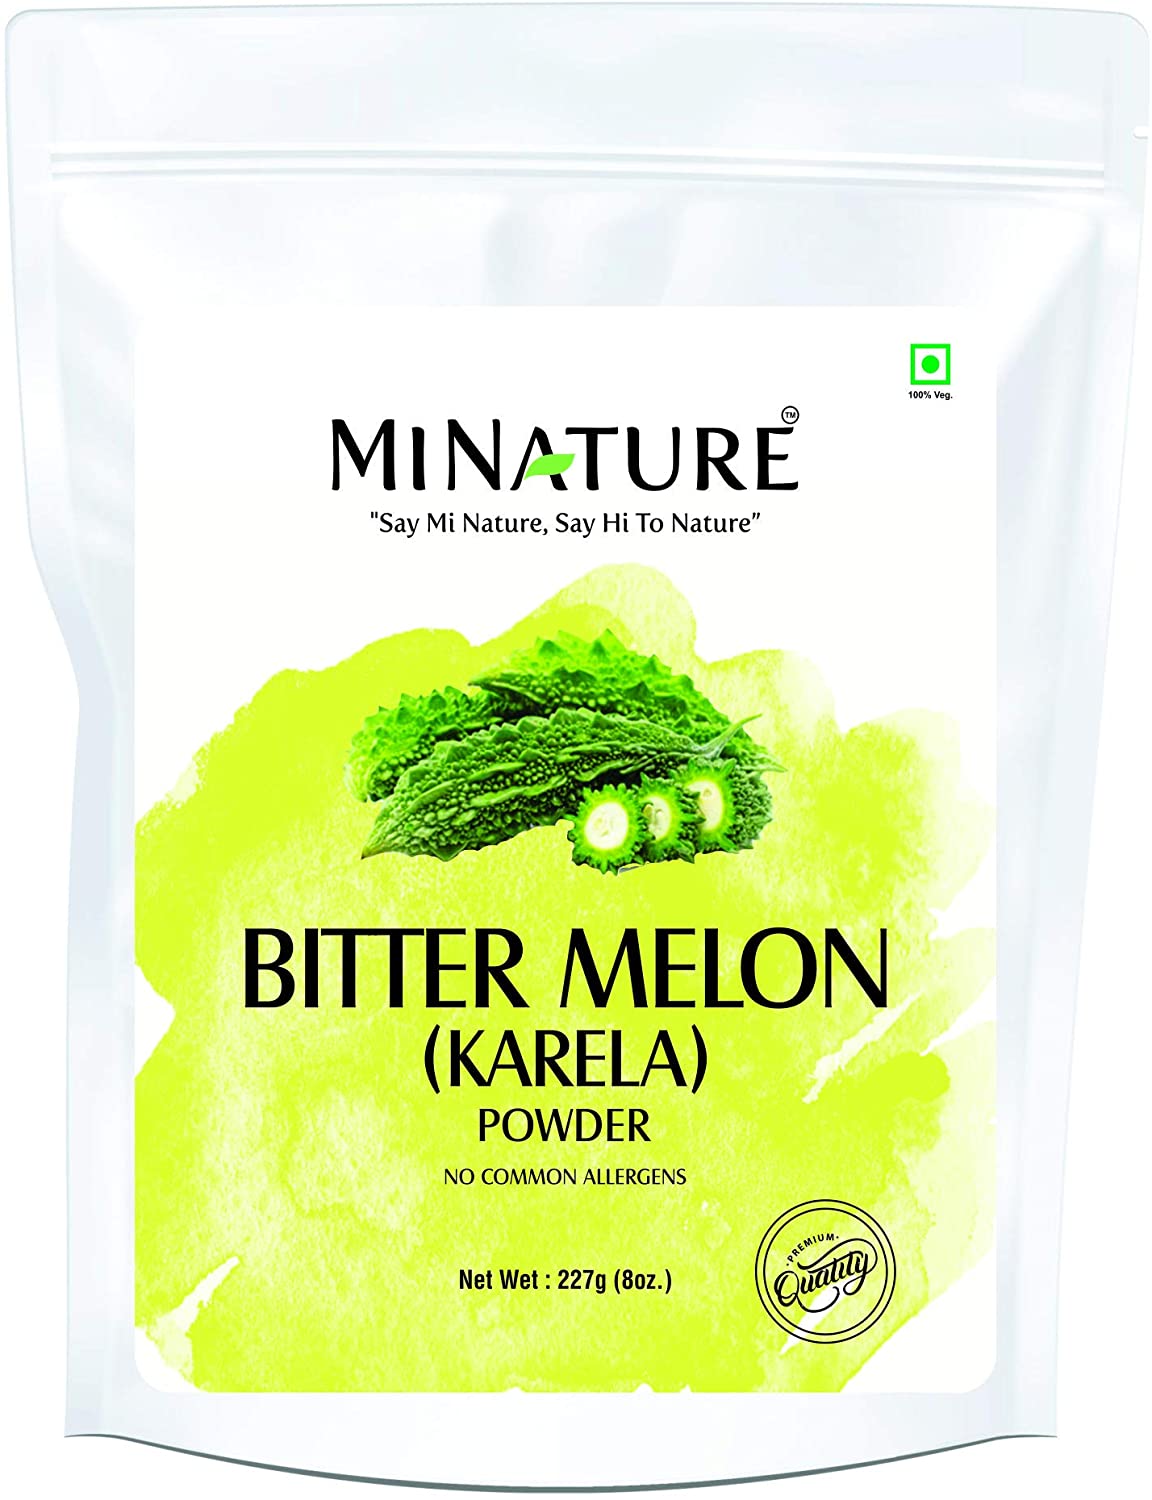 100% Natural Bitter Melon Powder (Karela)